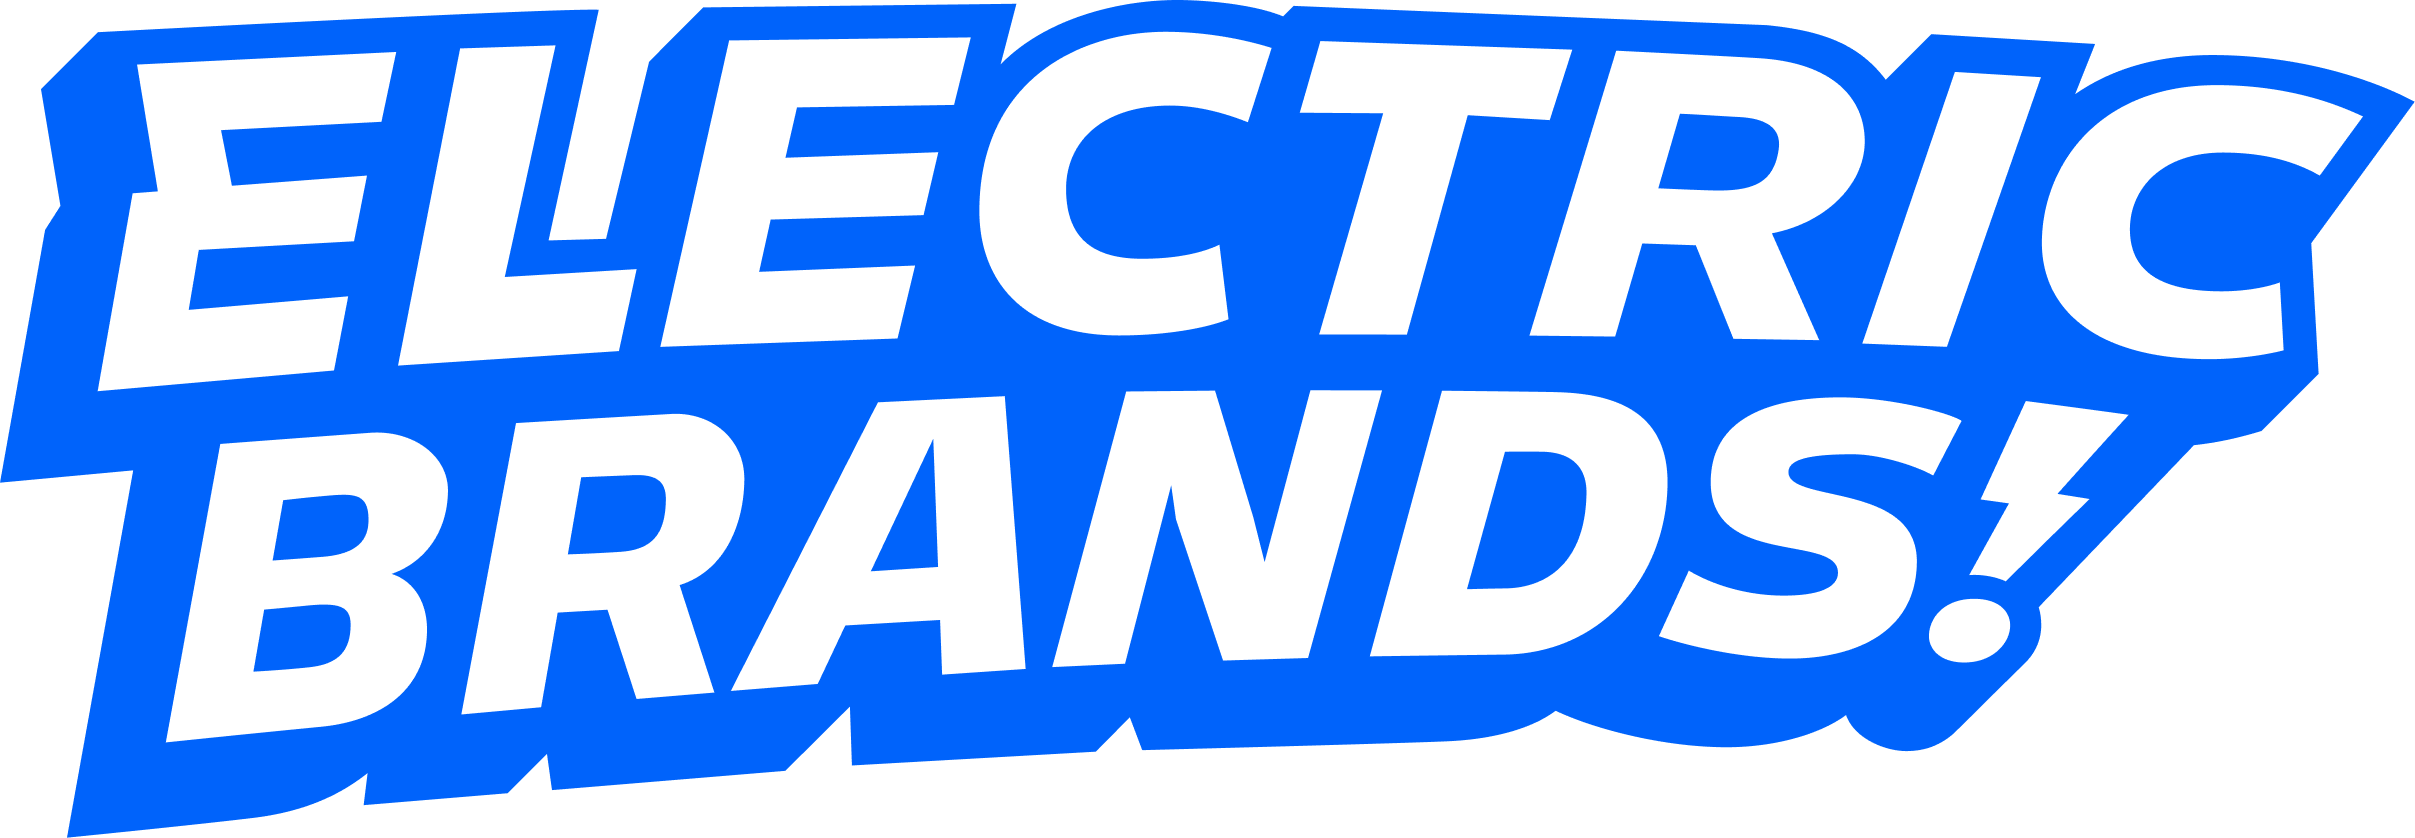 Logotipo_EB